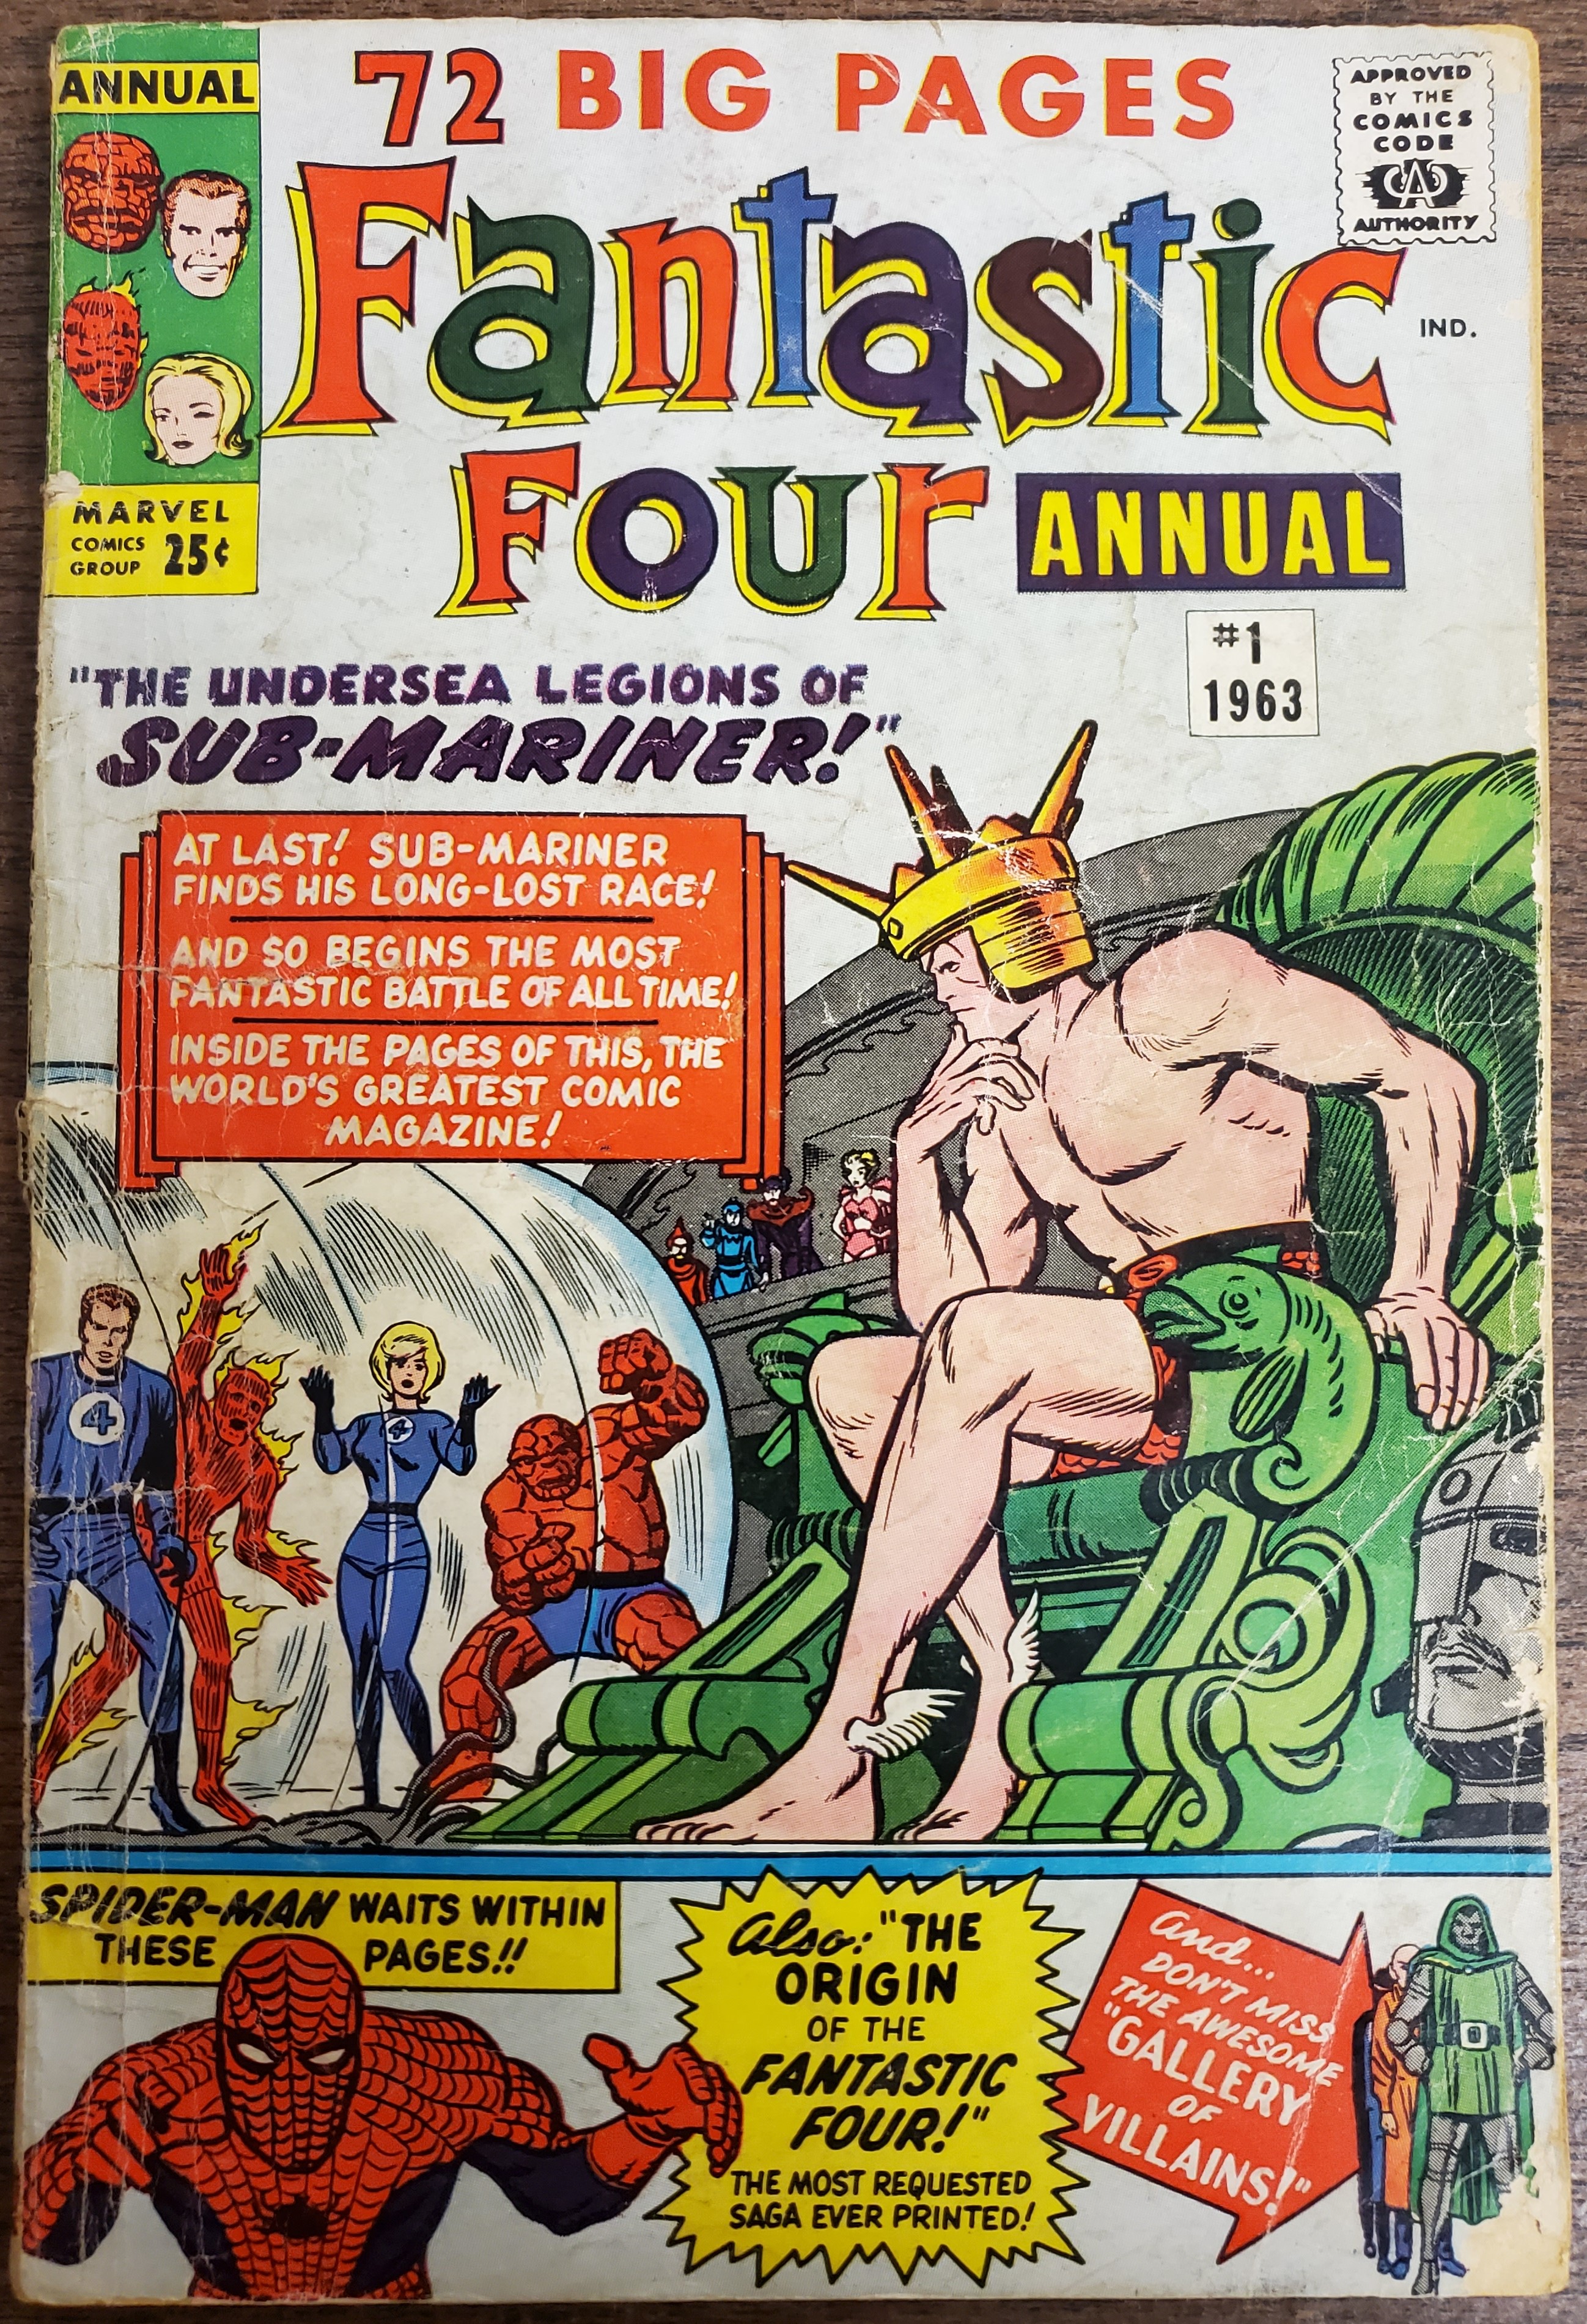 Fantastic Four Annual #1 (1963)- Fa 1.0 Back Cover Missing